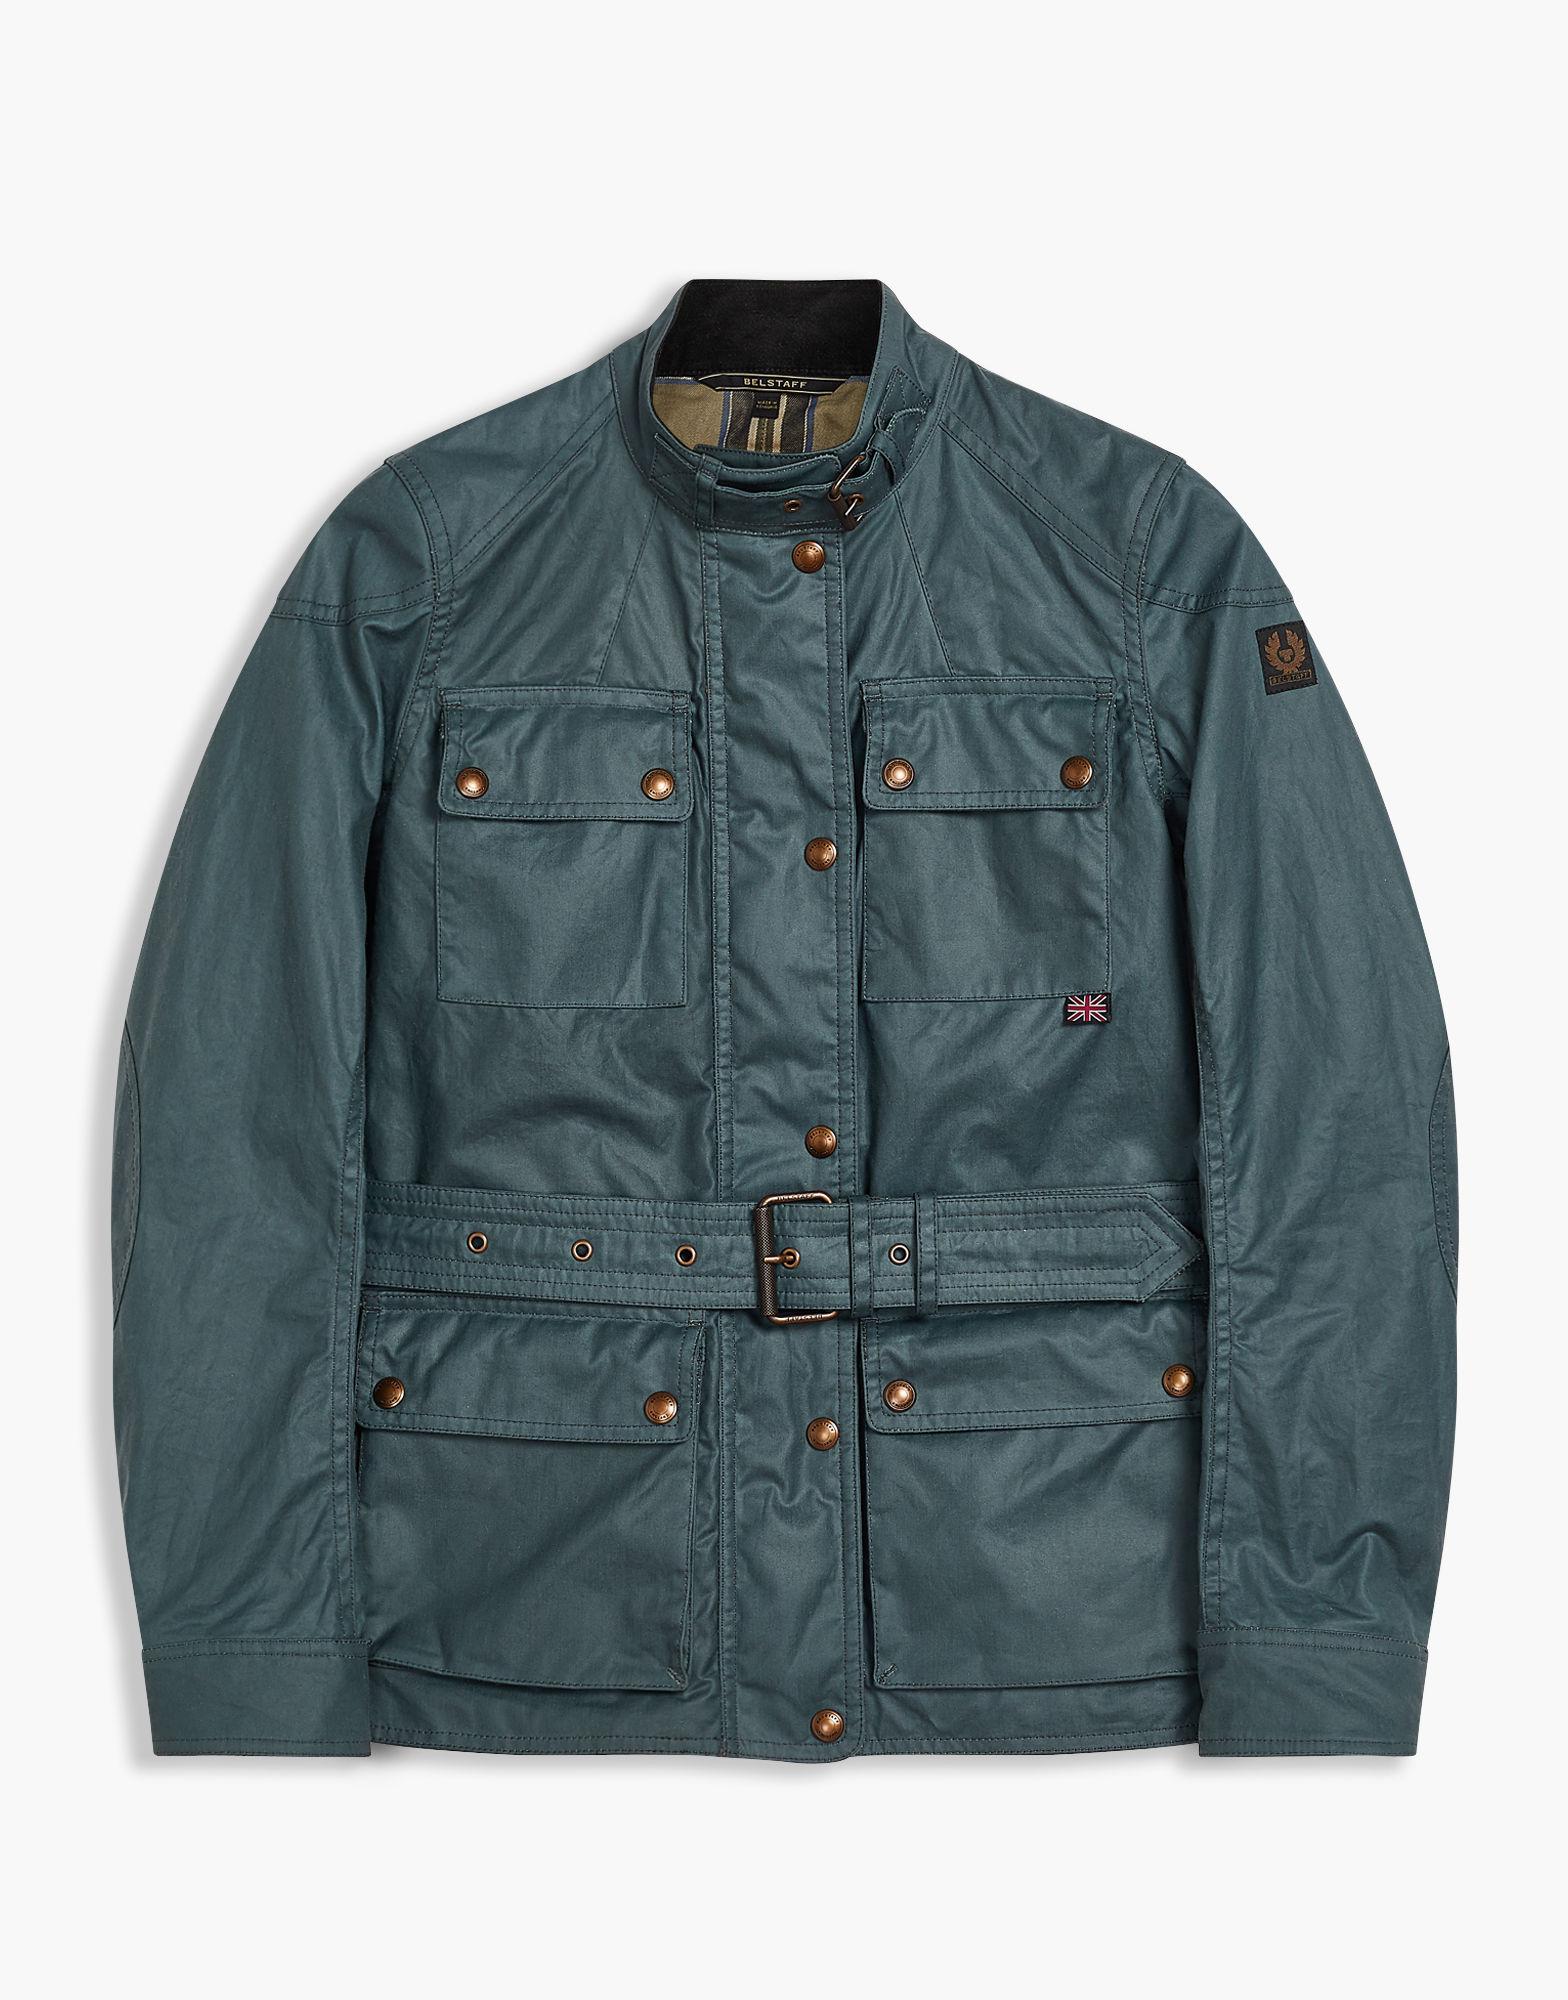 Belstaff Cotton Roadmaster 2.0 Jacket in Blue Pewter (Blue) for Men - Lyst